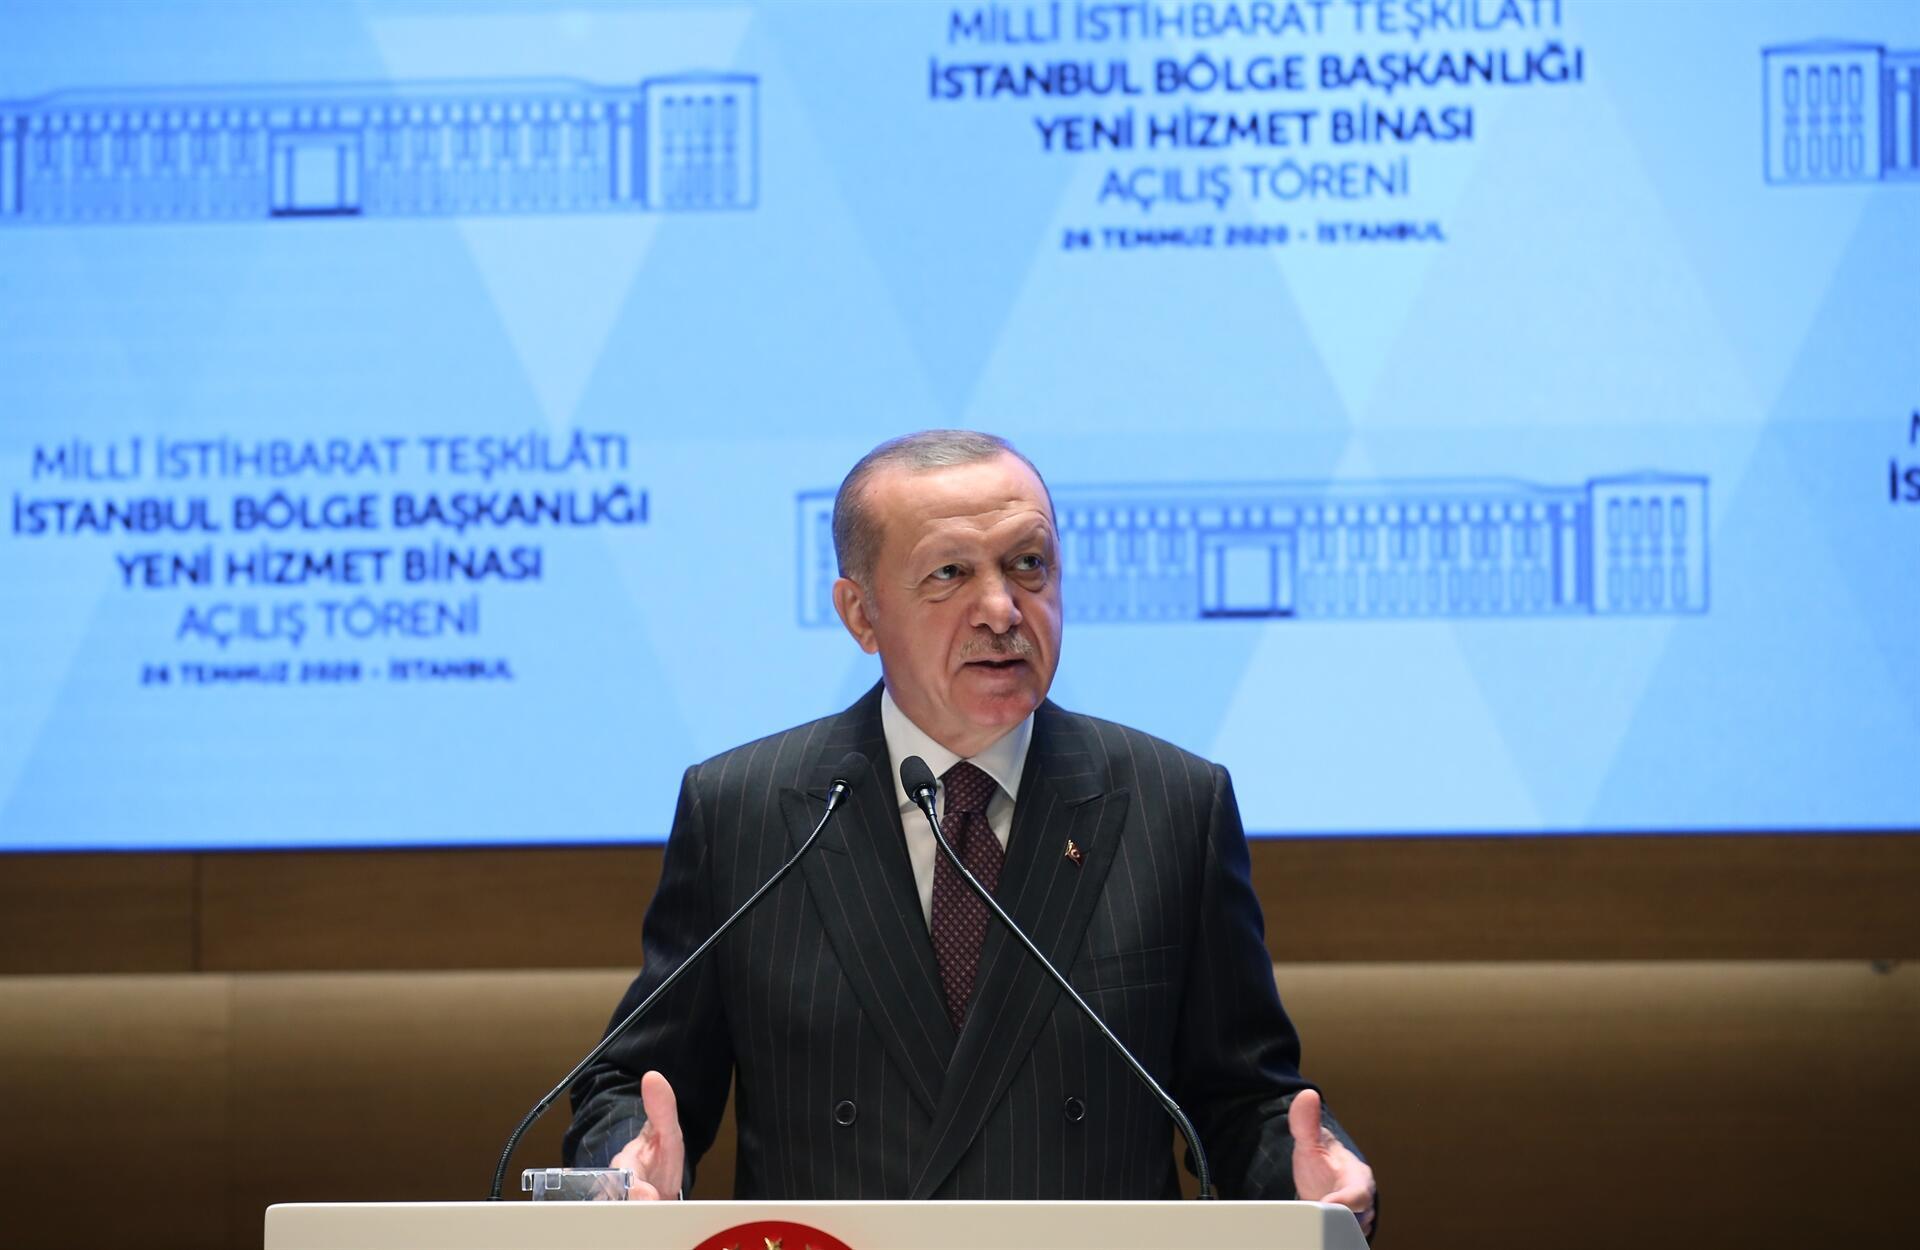 erdogan hails turkish intel s success says targeting mit not coincidence turkey news